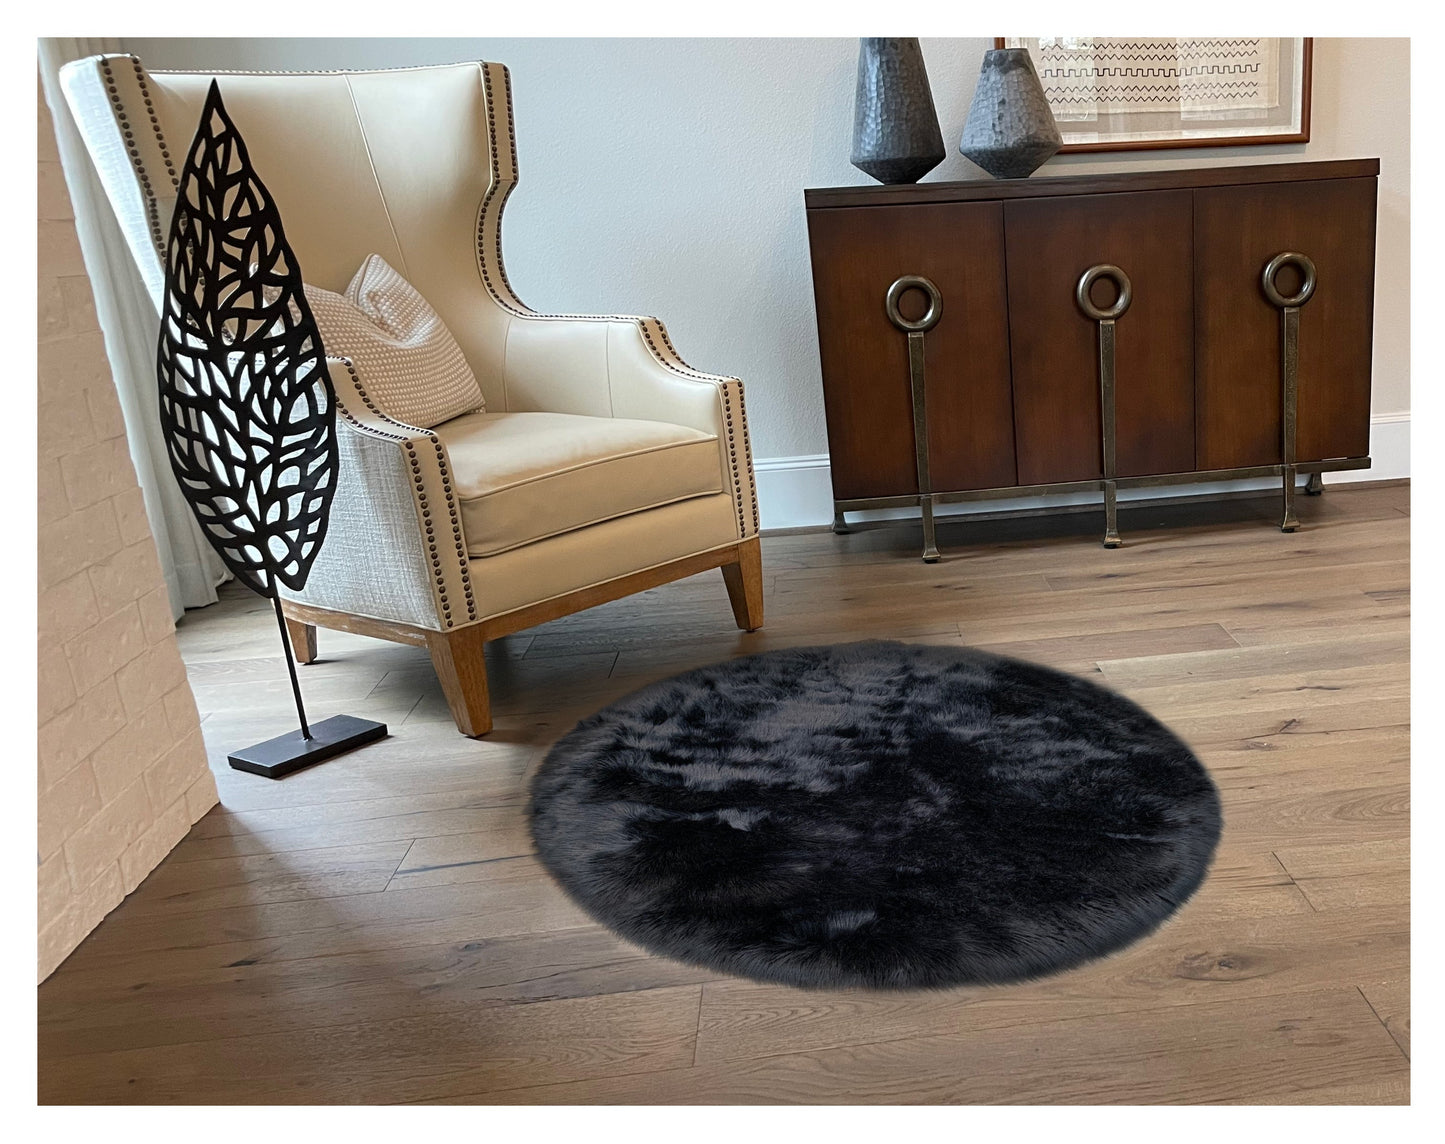 Faux sheepskin rug  Round Shaped 4' (120cm Diameter)